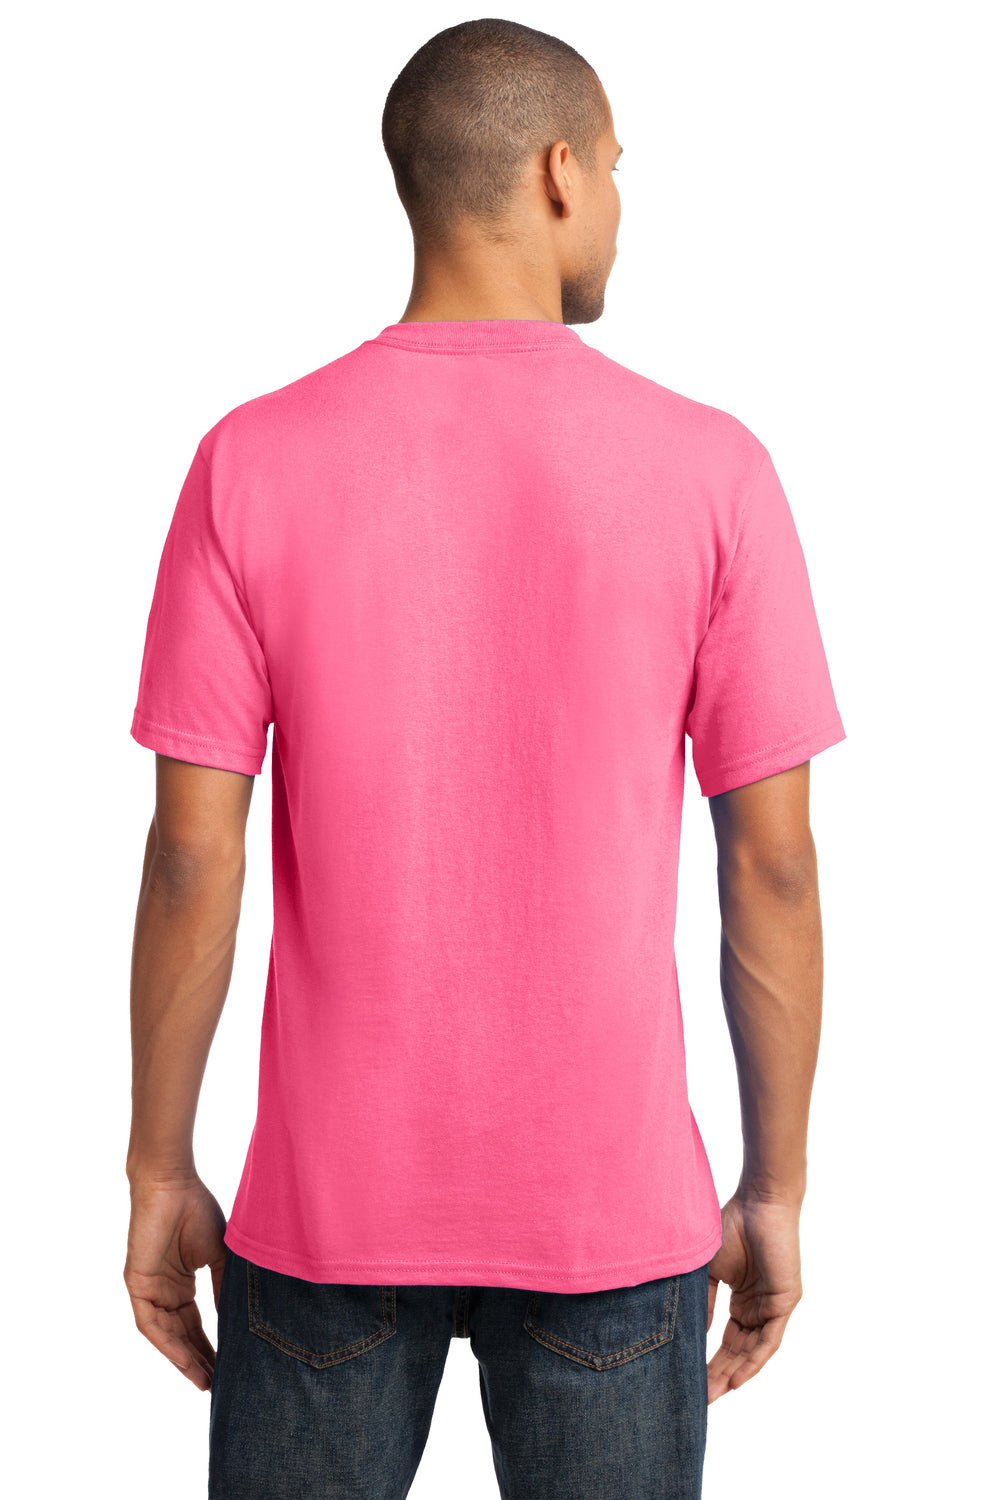 Port & Company PC54V Mens Core Short Sleeve V-Neck T-Shirt Neon Pink Back